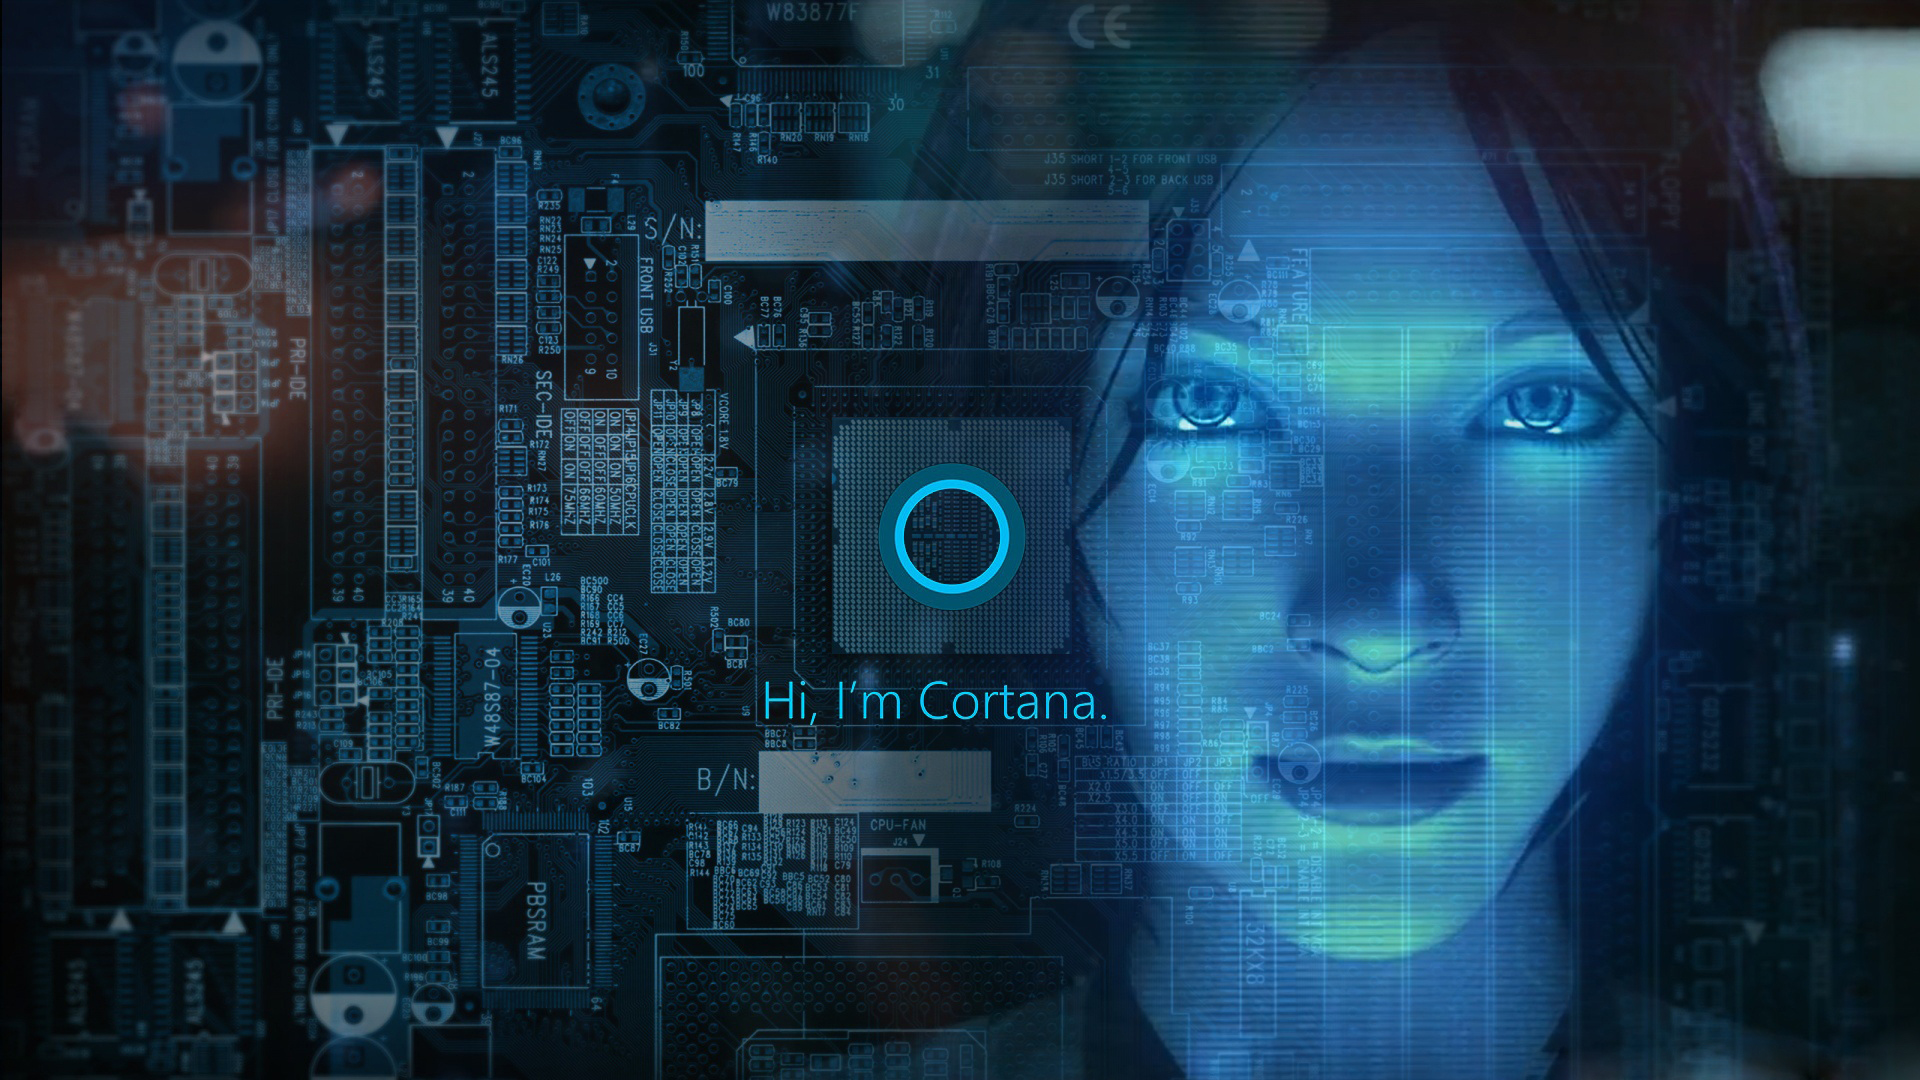  Windows Phone Voice Hi Im Cortana wallpaper Best HD Wallpapers 1920x1080